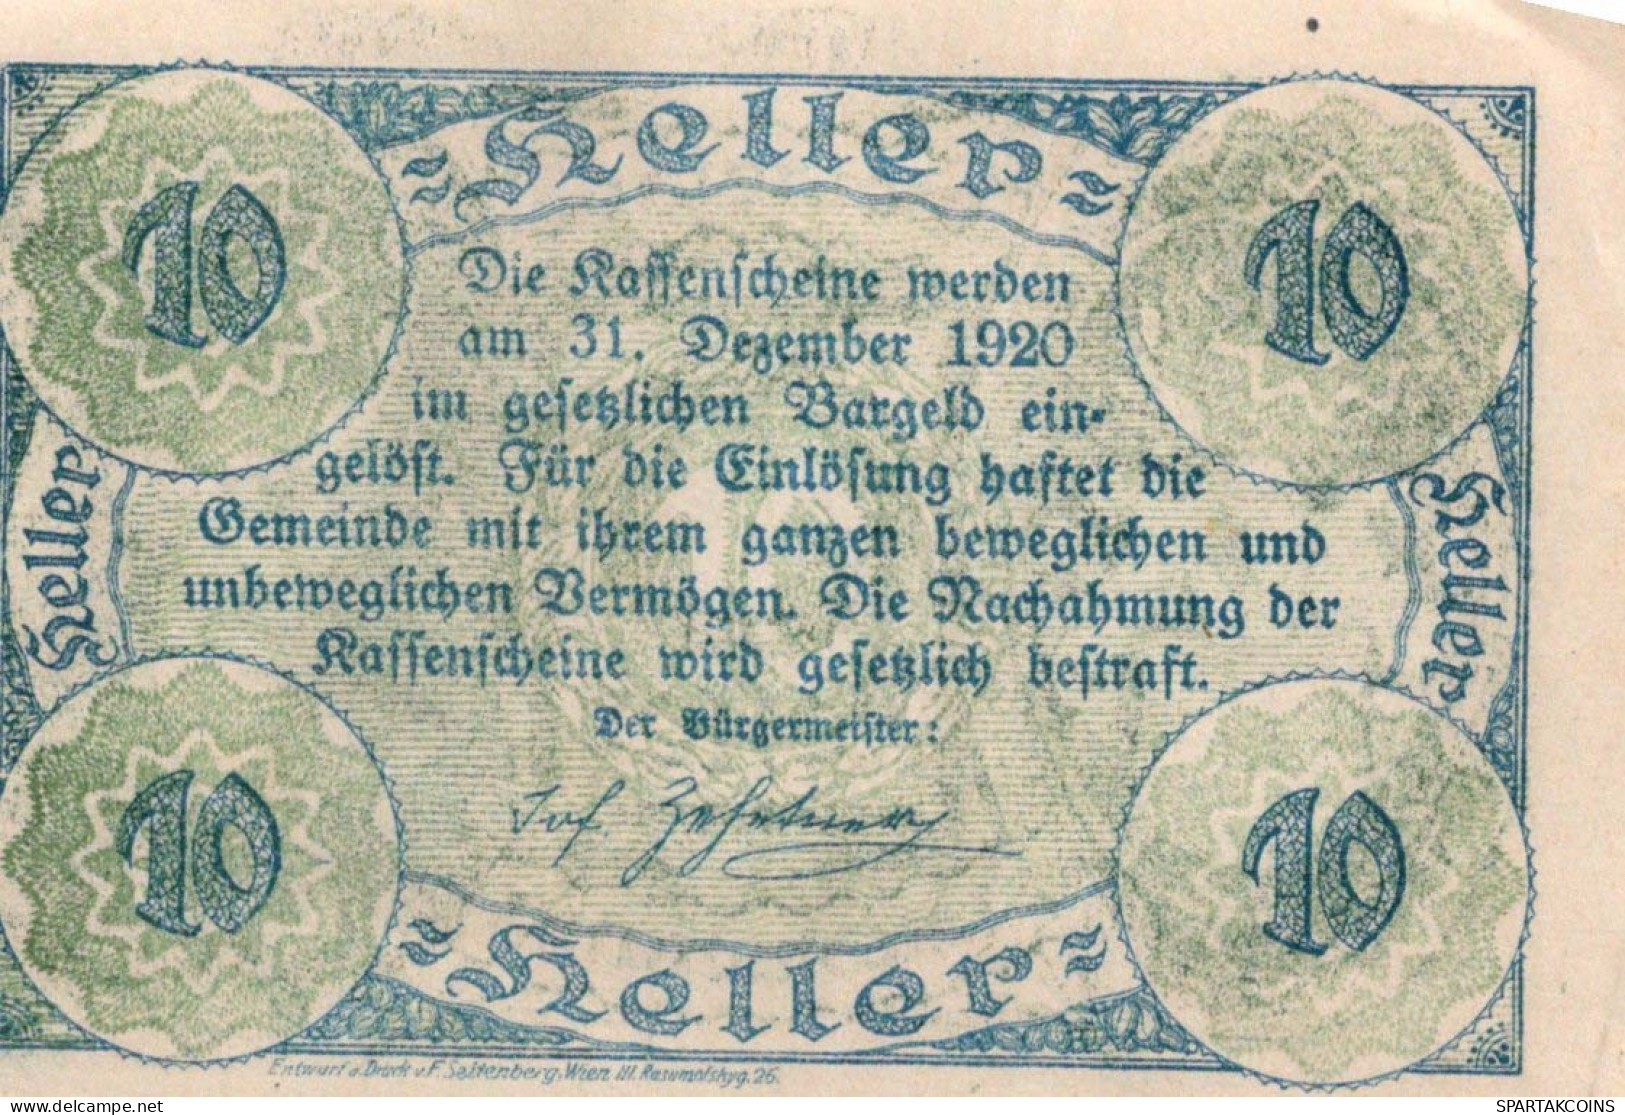 10 HELLER 1920 Stadt HAUSMENING Niedrigeren Österreich Notgeld Papiergeld Banknote #PG842 - [11] Lokale Uitgaven